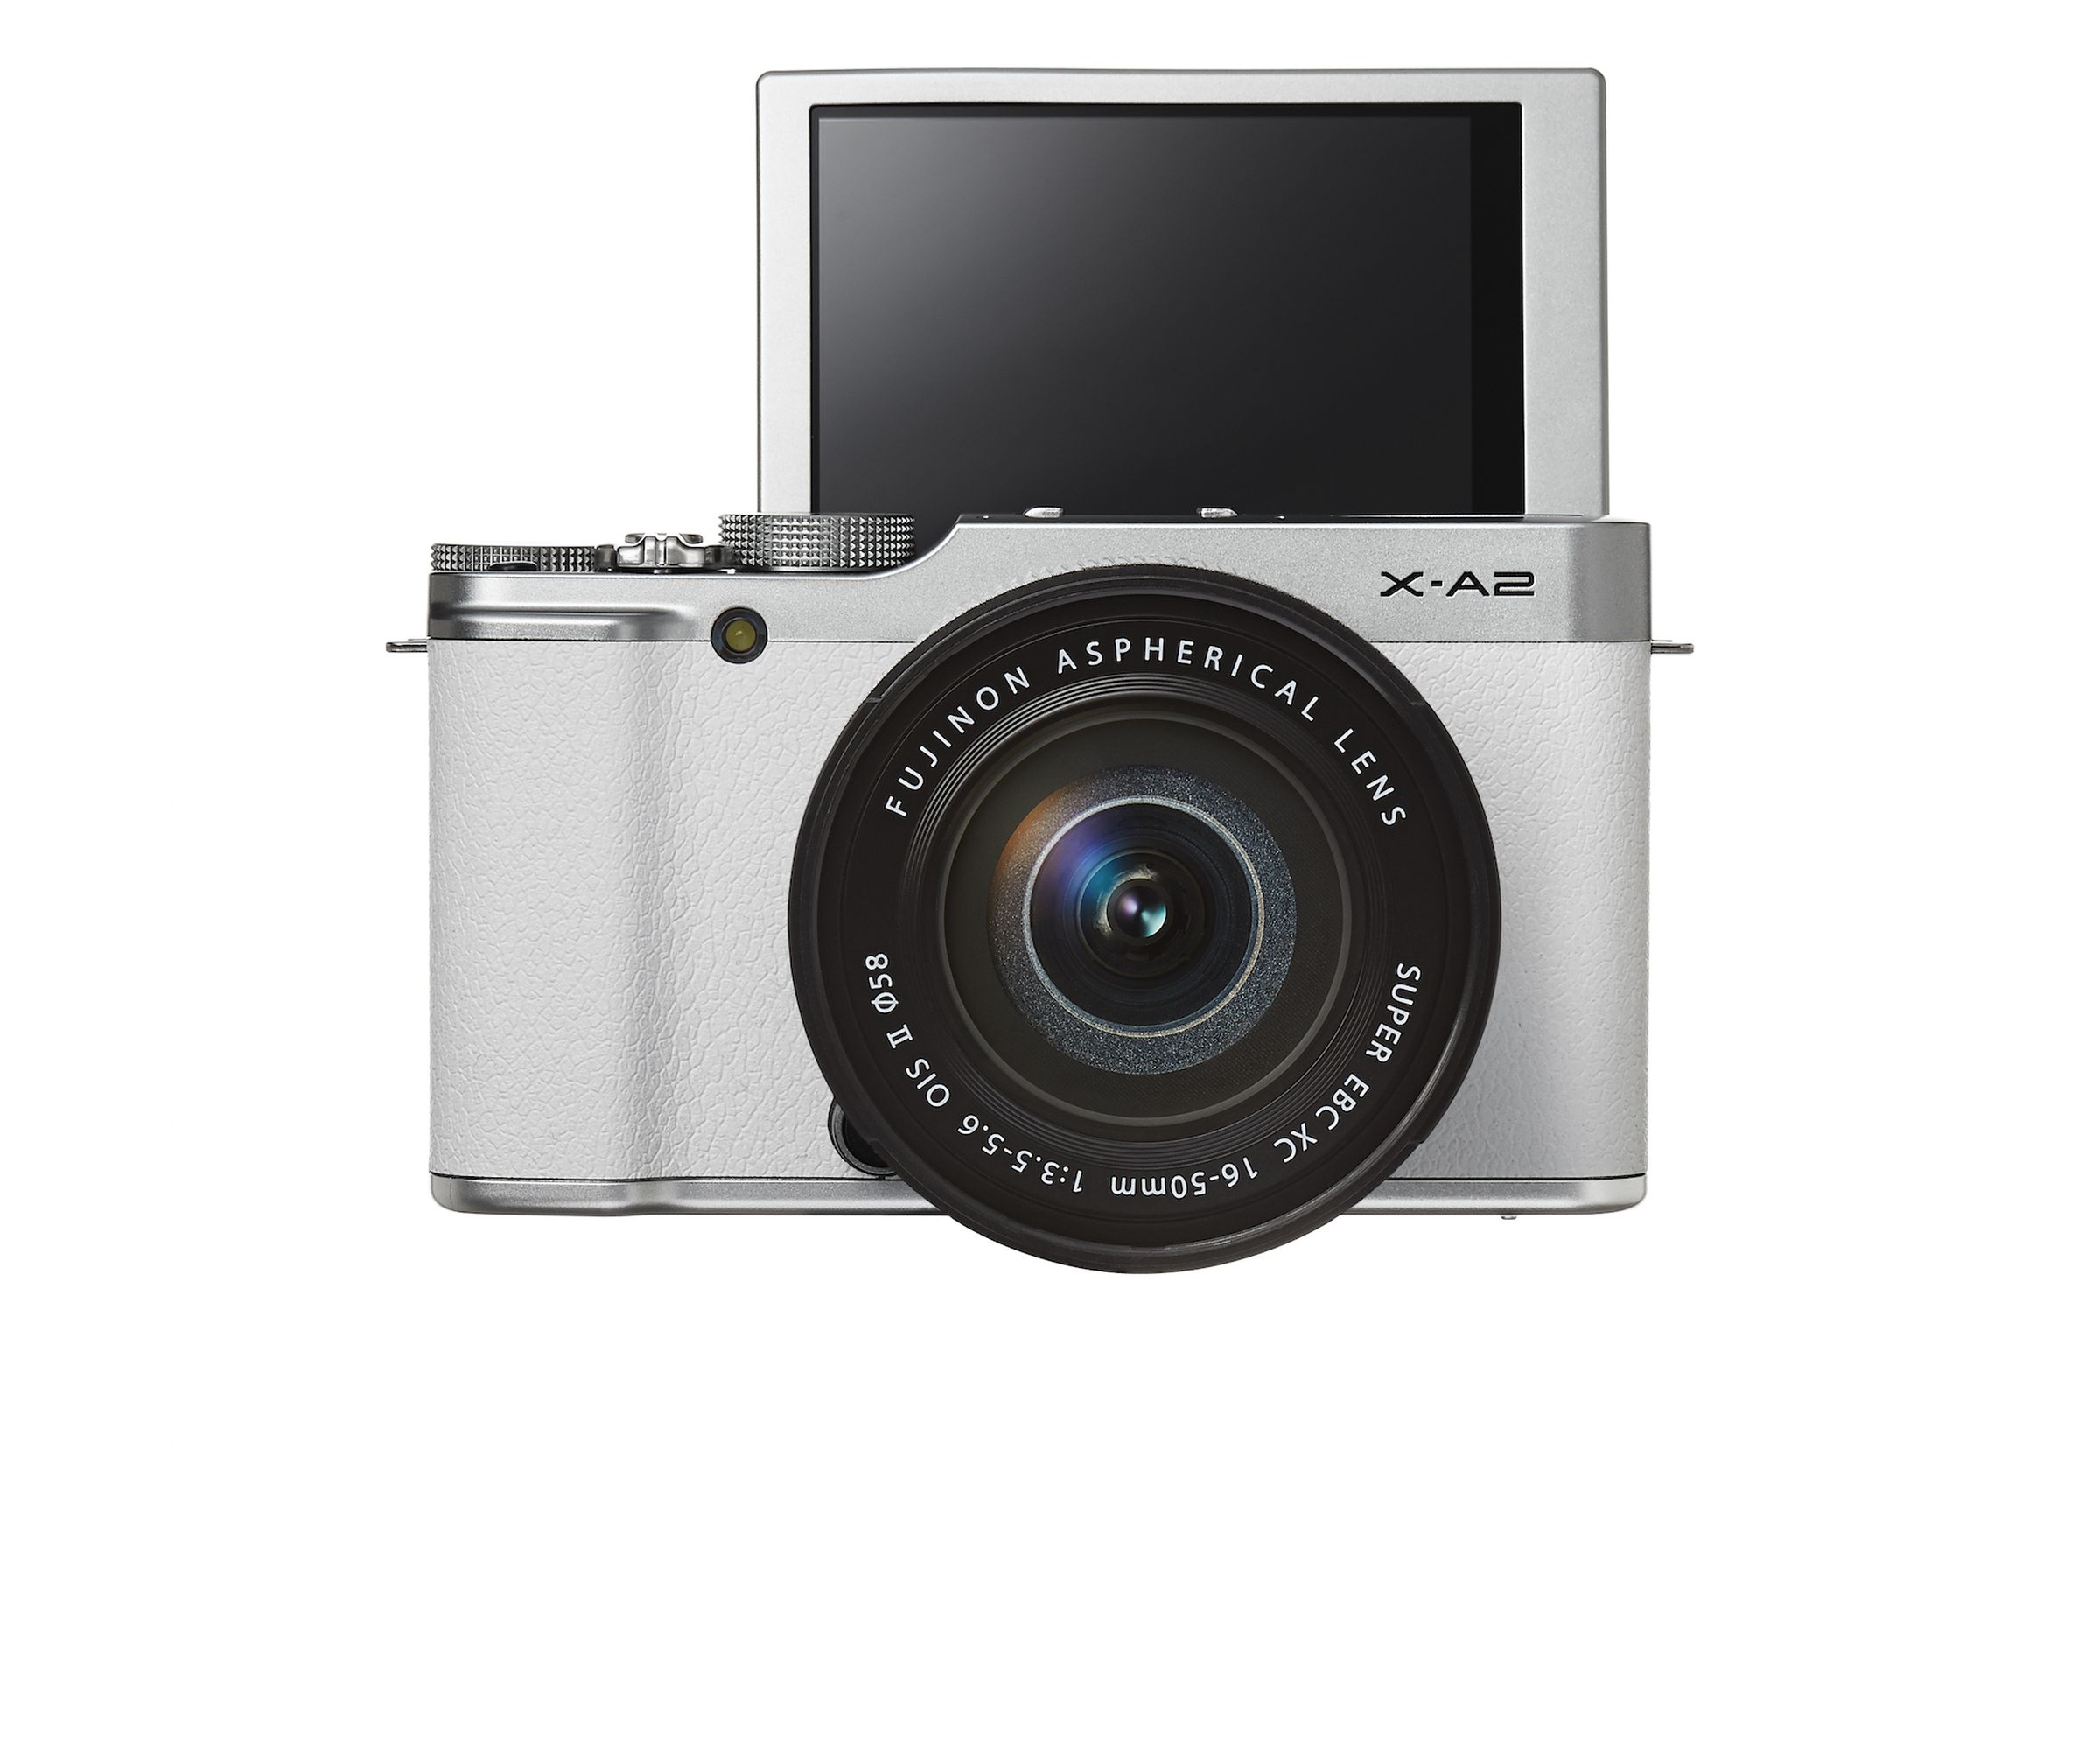 Fujifilm X-A2 images